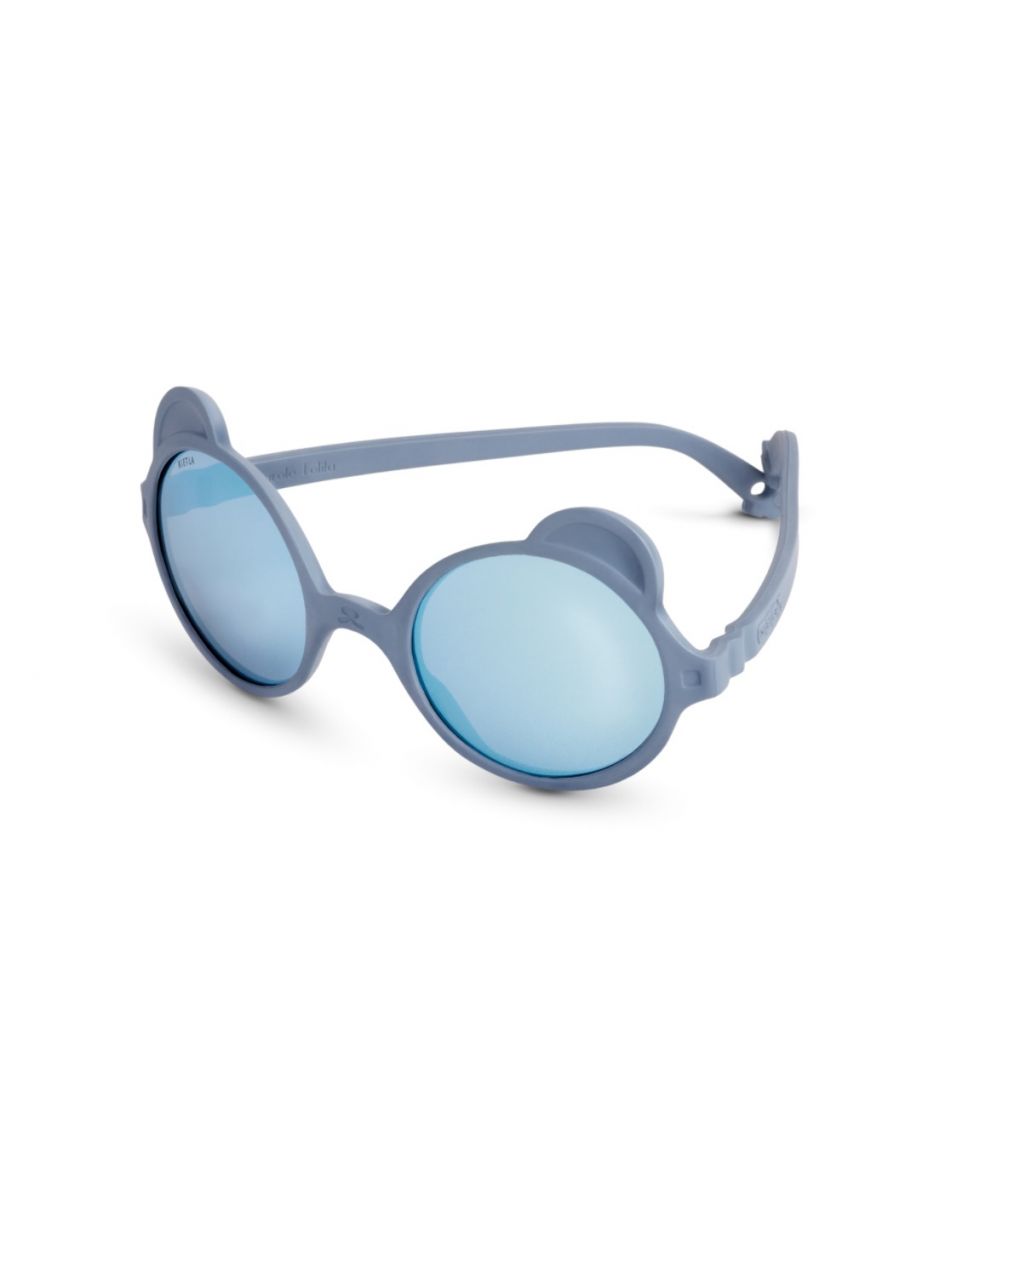 Kietla γυαλιά ηλίου ours'on 0-1 ετών silver blue - kietla